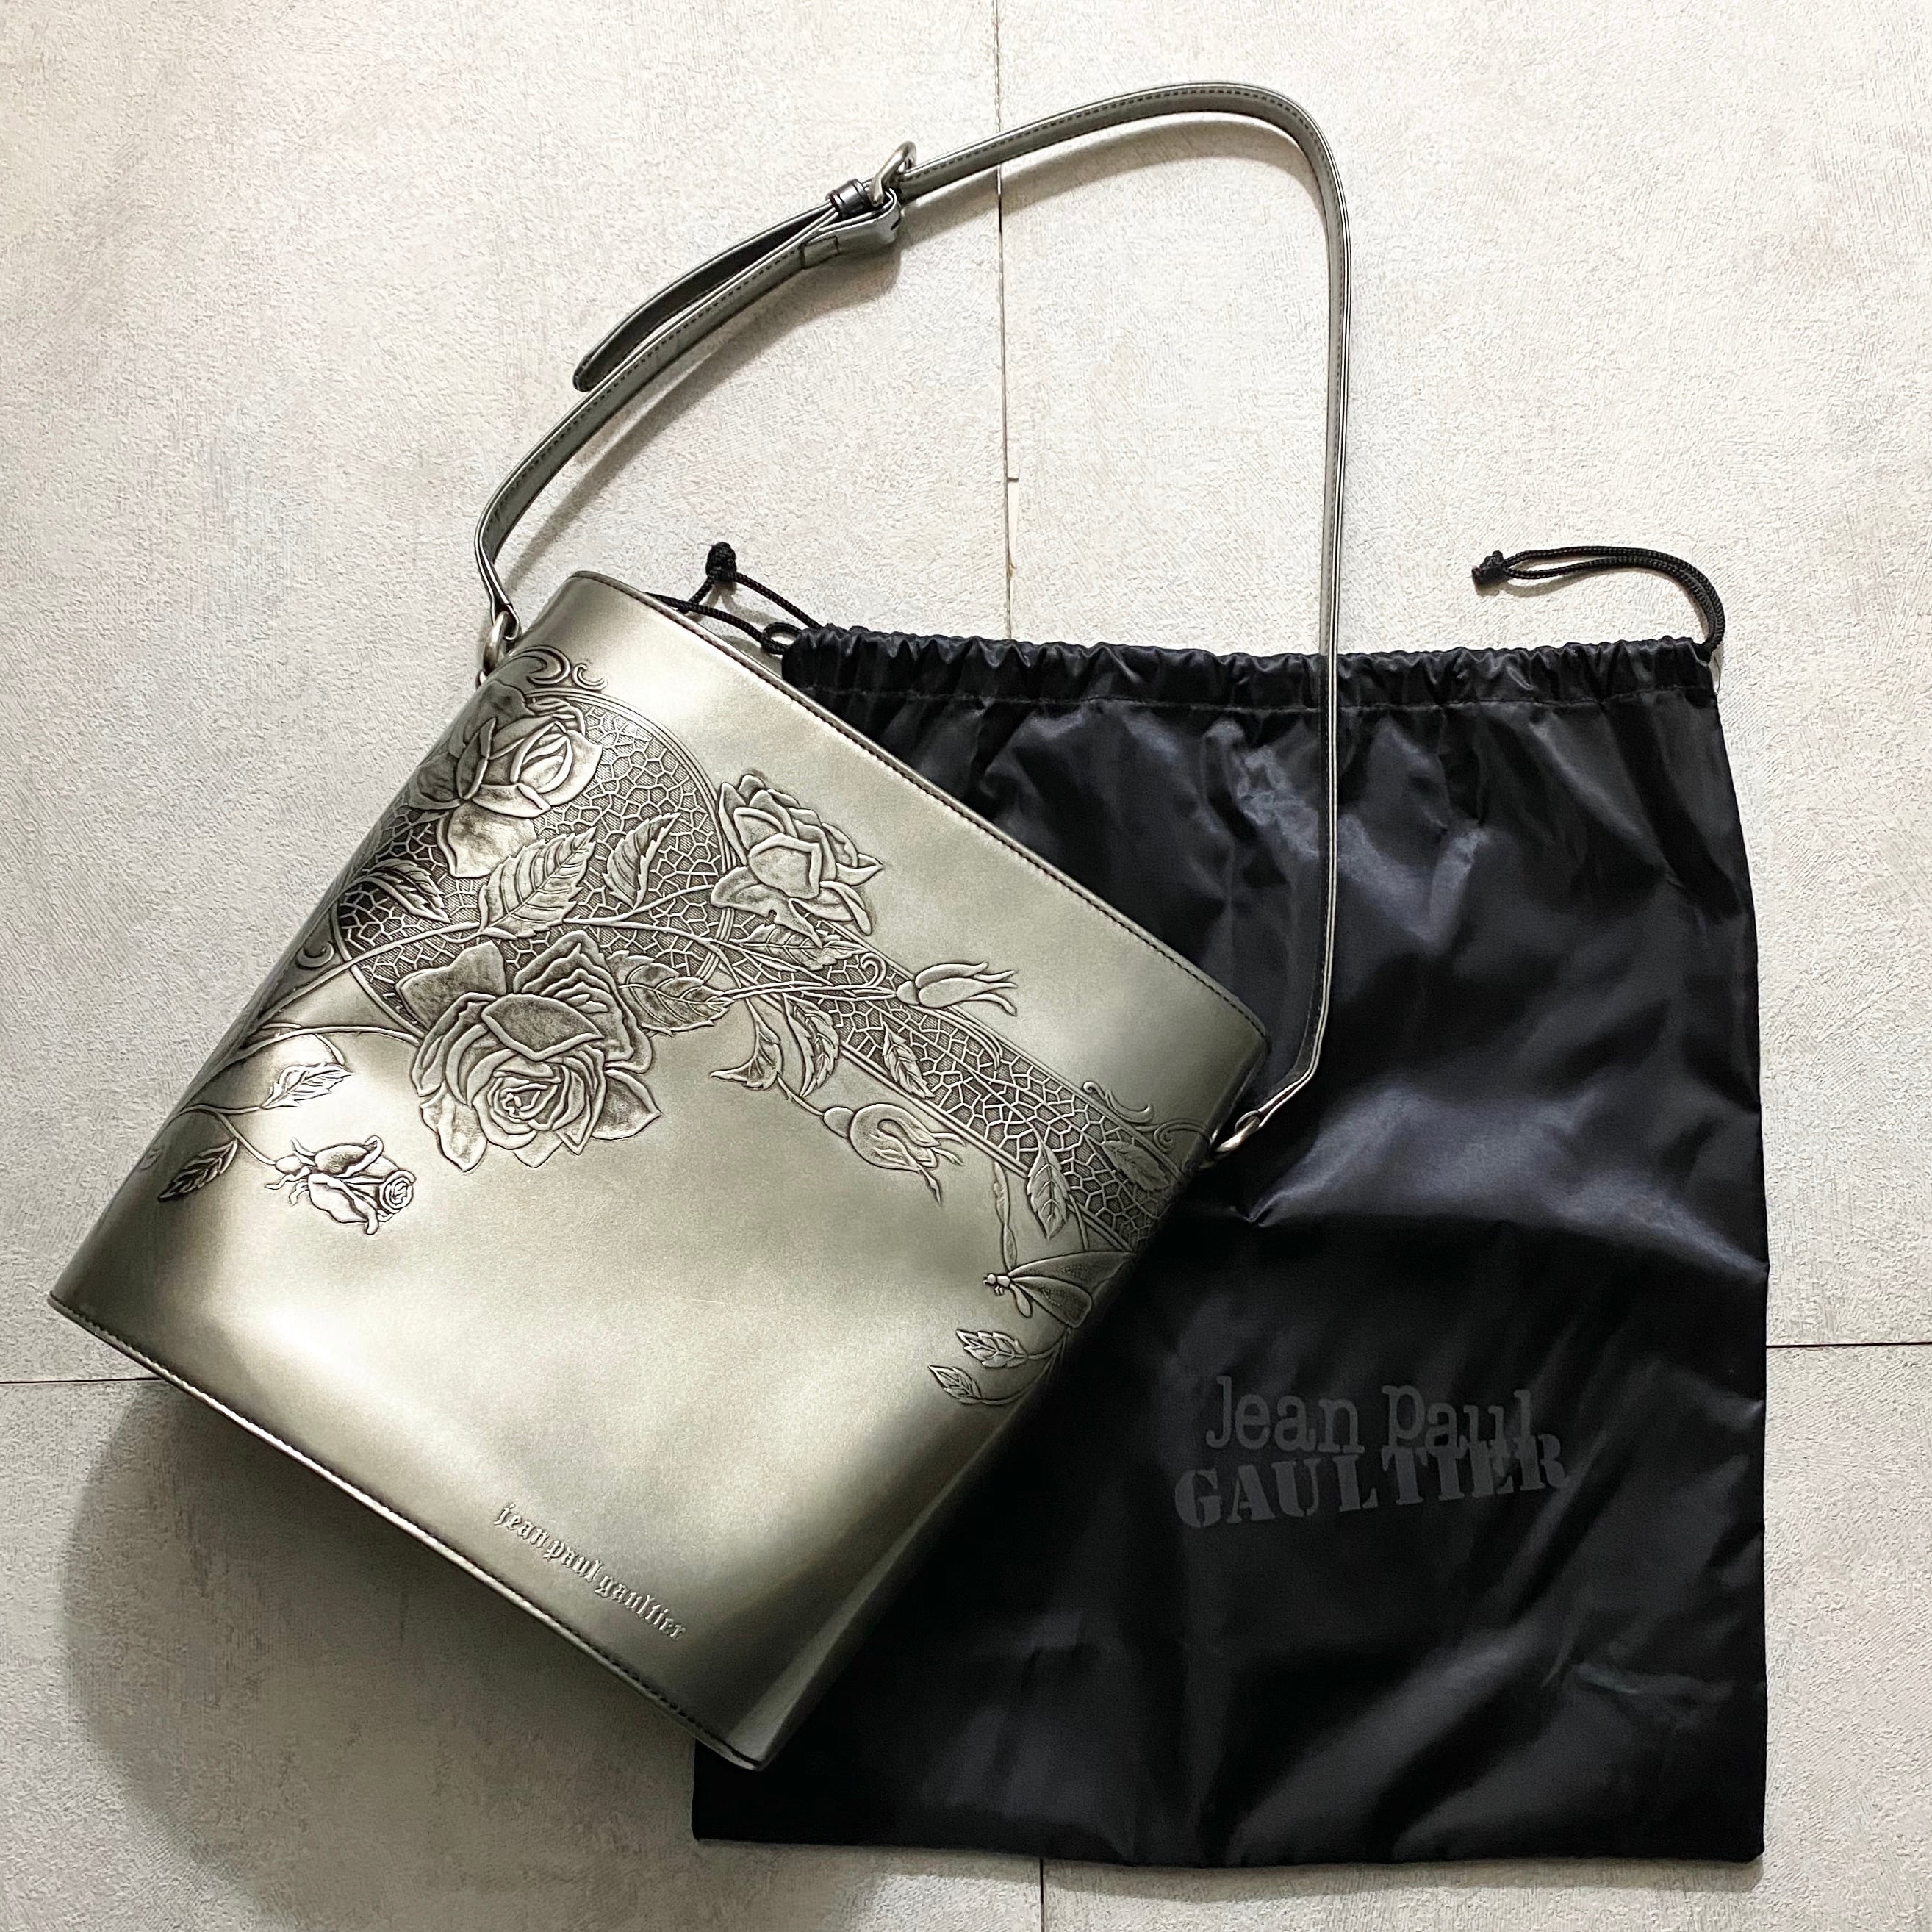 JEAN PAUL GAULTIER metallic bag “new rose” | NOIR ONLINE powered by BASE